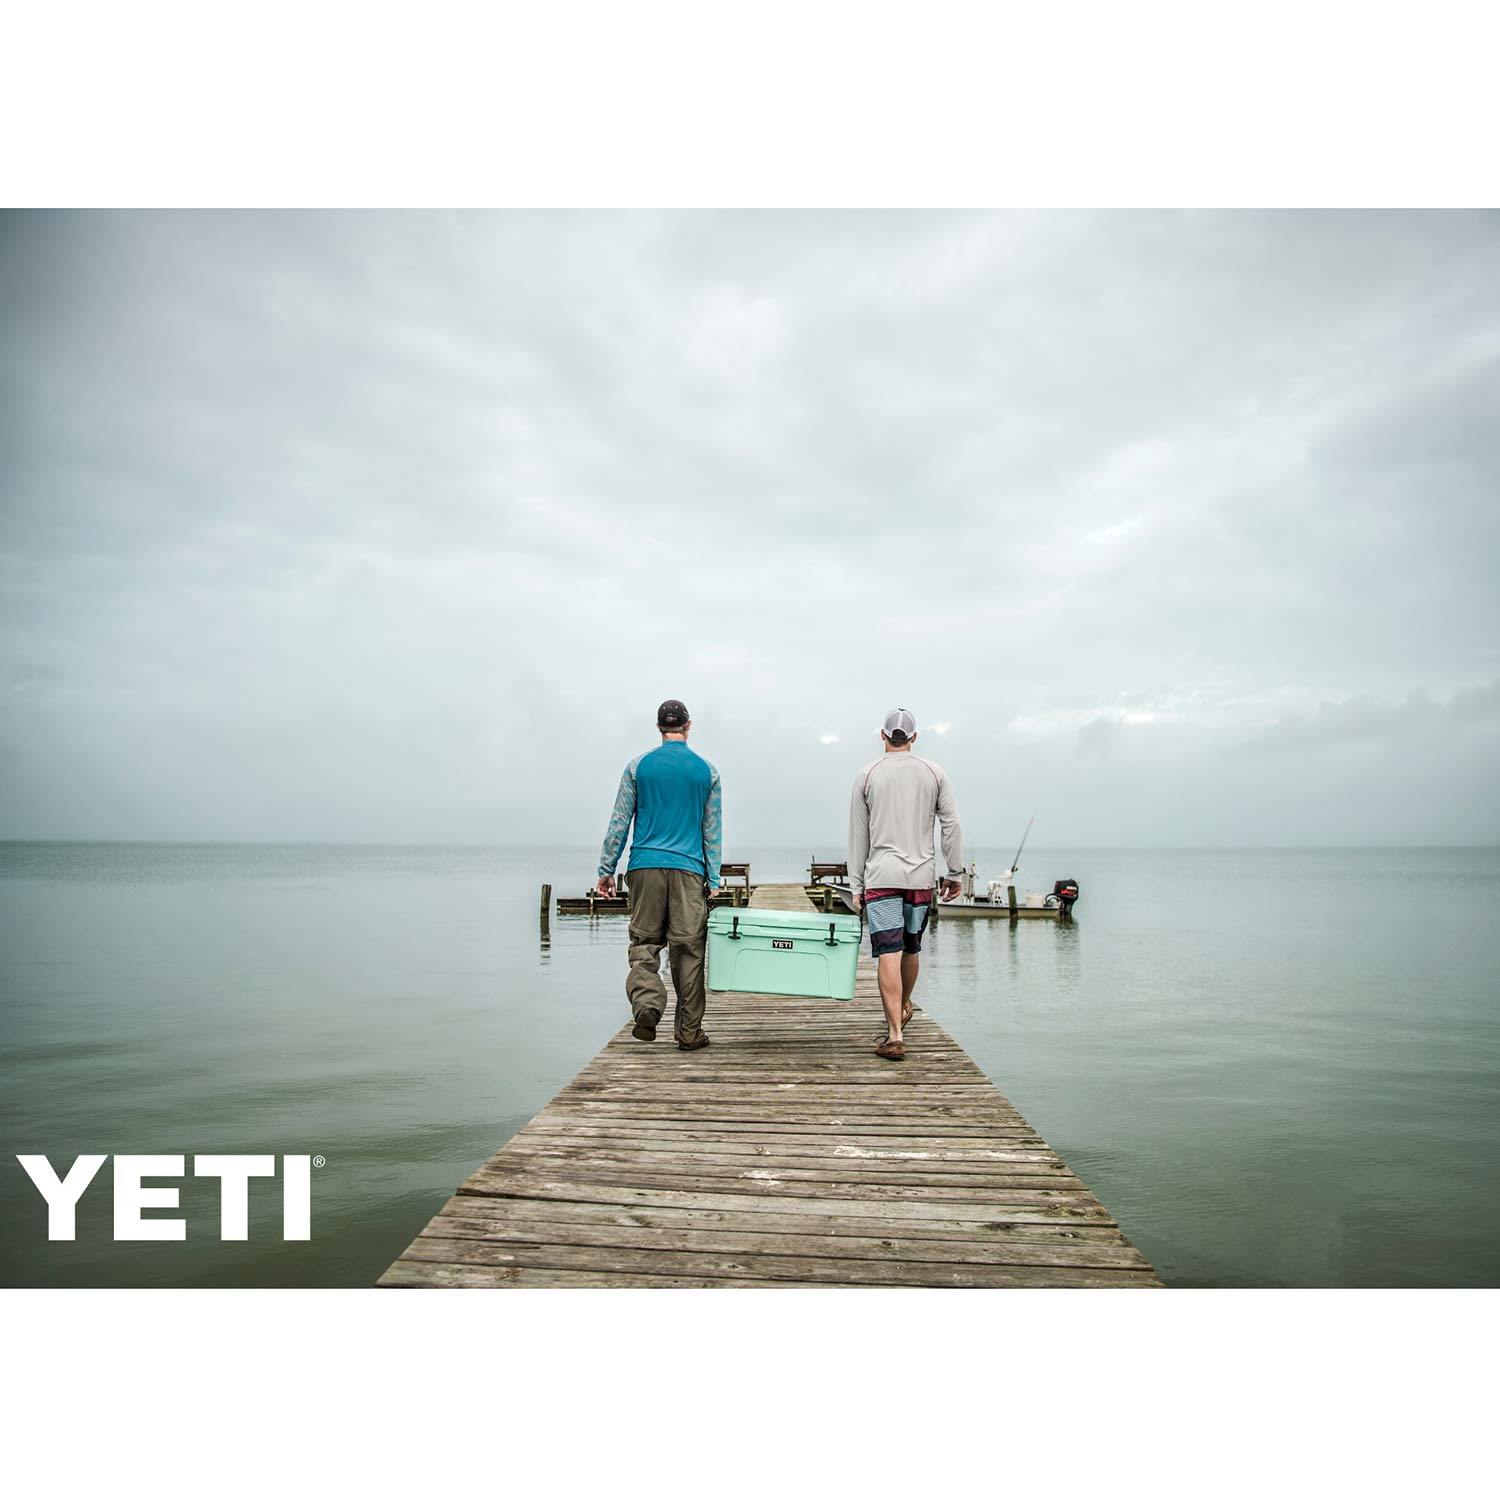 Yeti Tundra 65 as a fishing platform #YetiCoolers #YetiTundraCooler